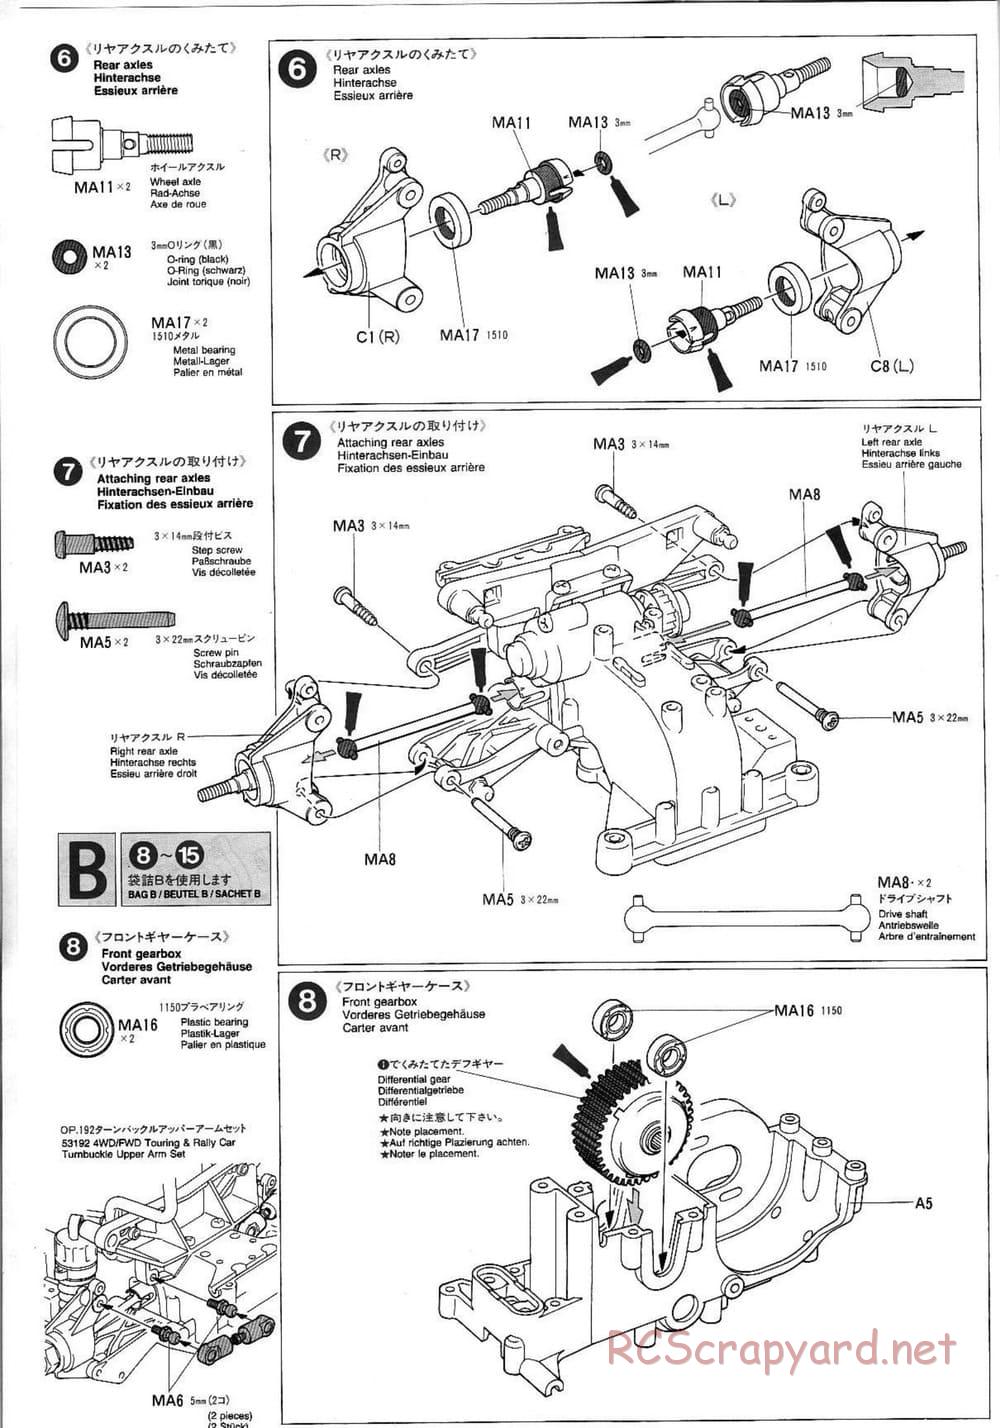 Tamiya - Mitsubishi Lancer Evolution V WRC - TA-03F Chassis - Manual - Page 6